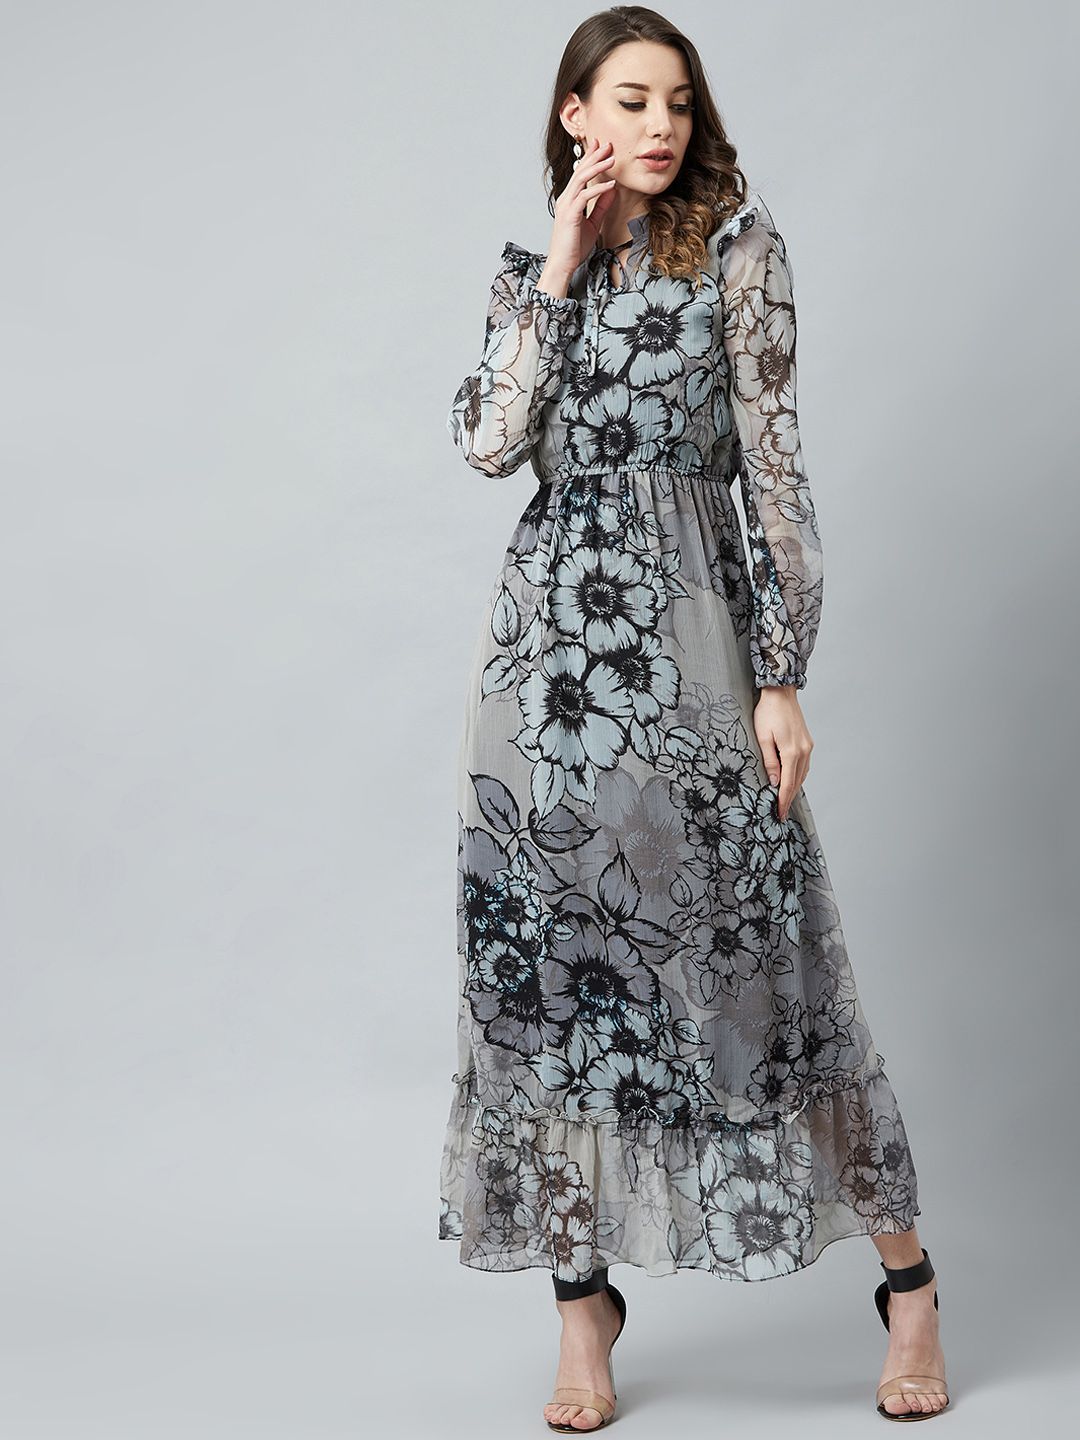 Athena Grey & Black Floral Printed Maxi Dress Price in India